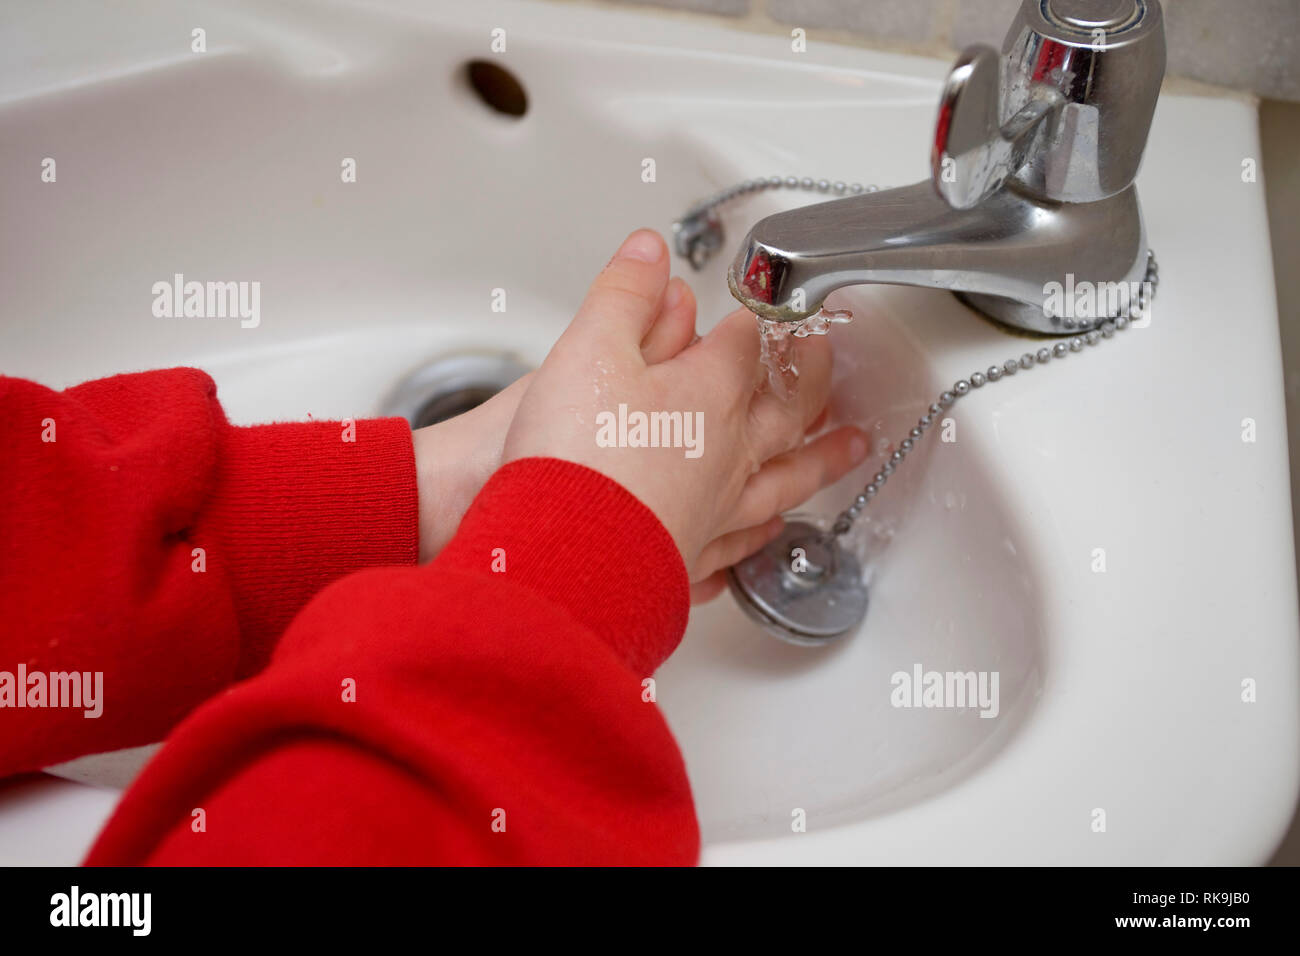 Child washing her hands under water tap Stock Photo